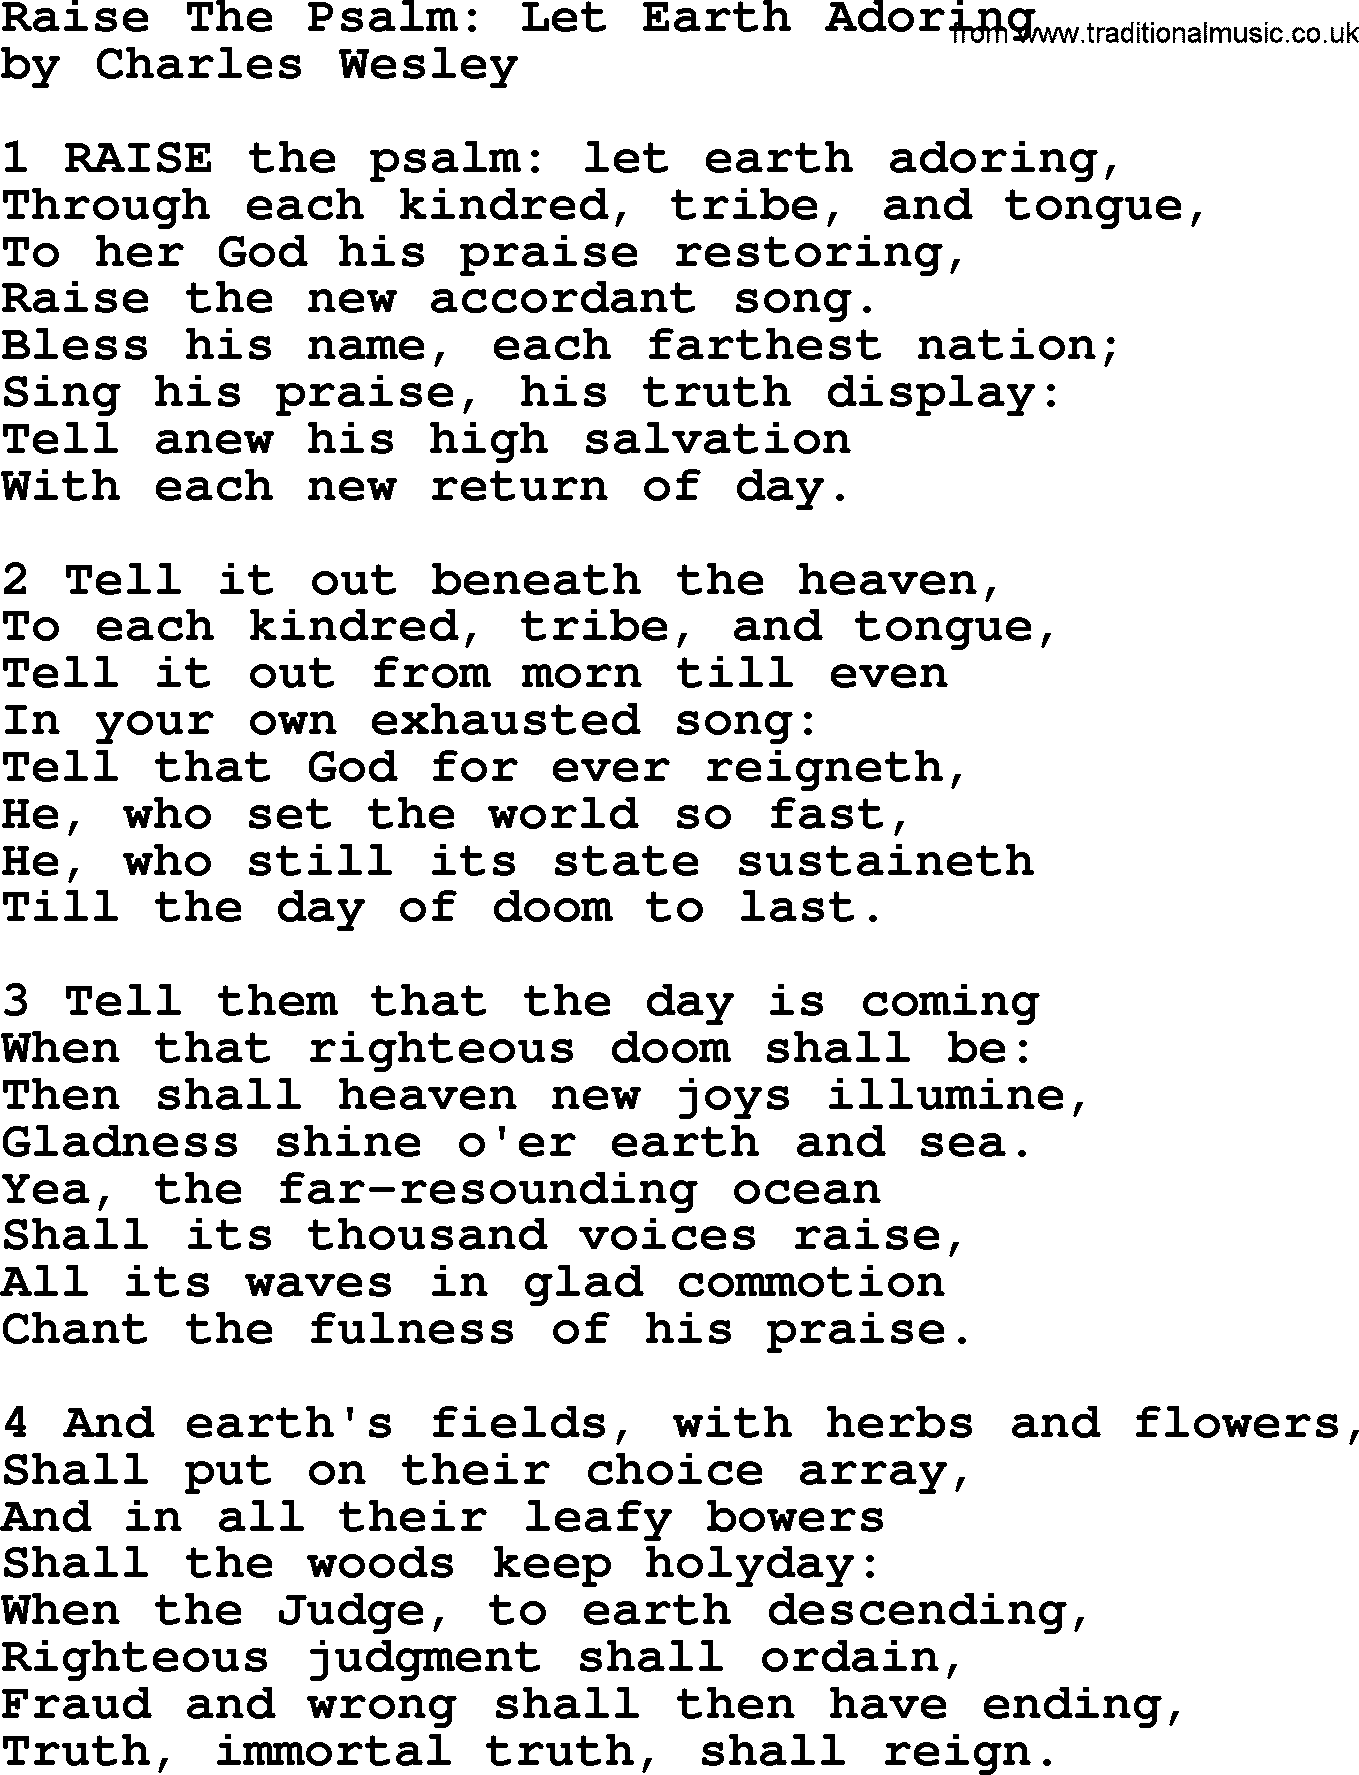 Charles Wesley hymn: Raise The Psalm_ Let Earth Adoring, lyrics